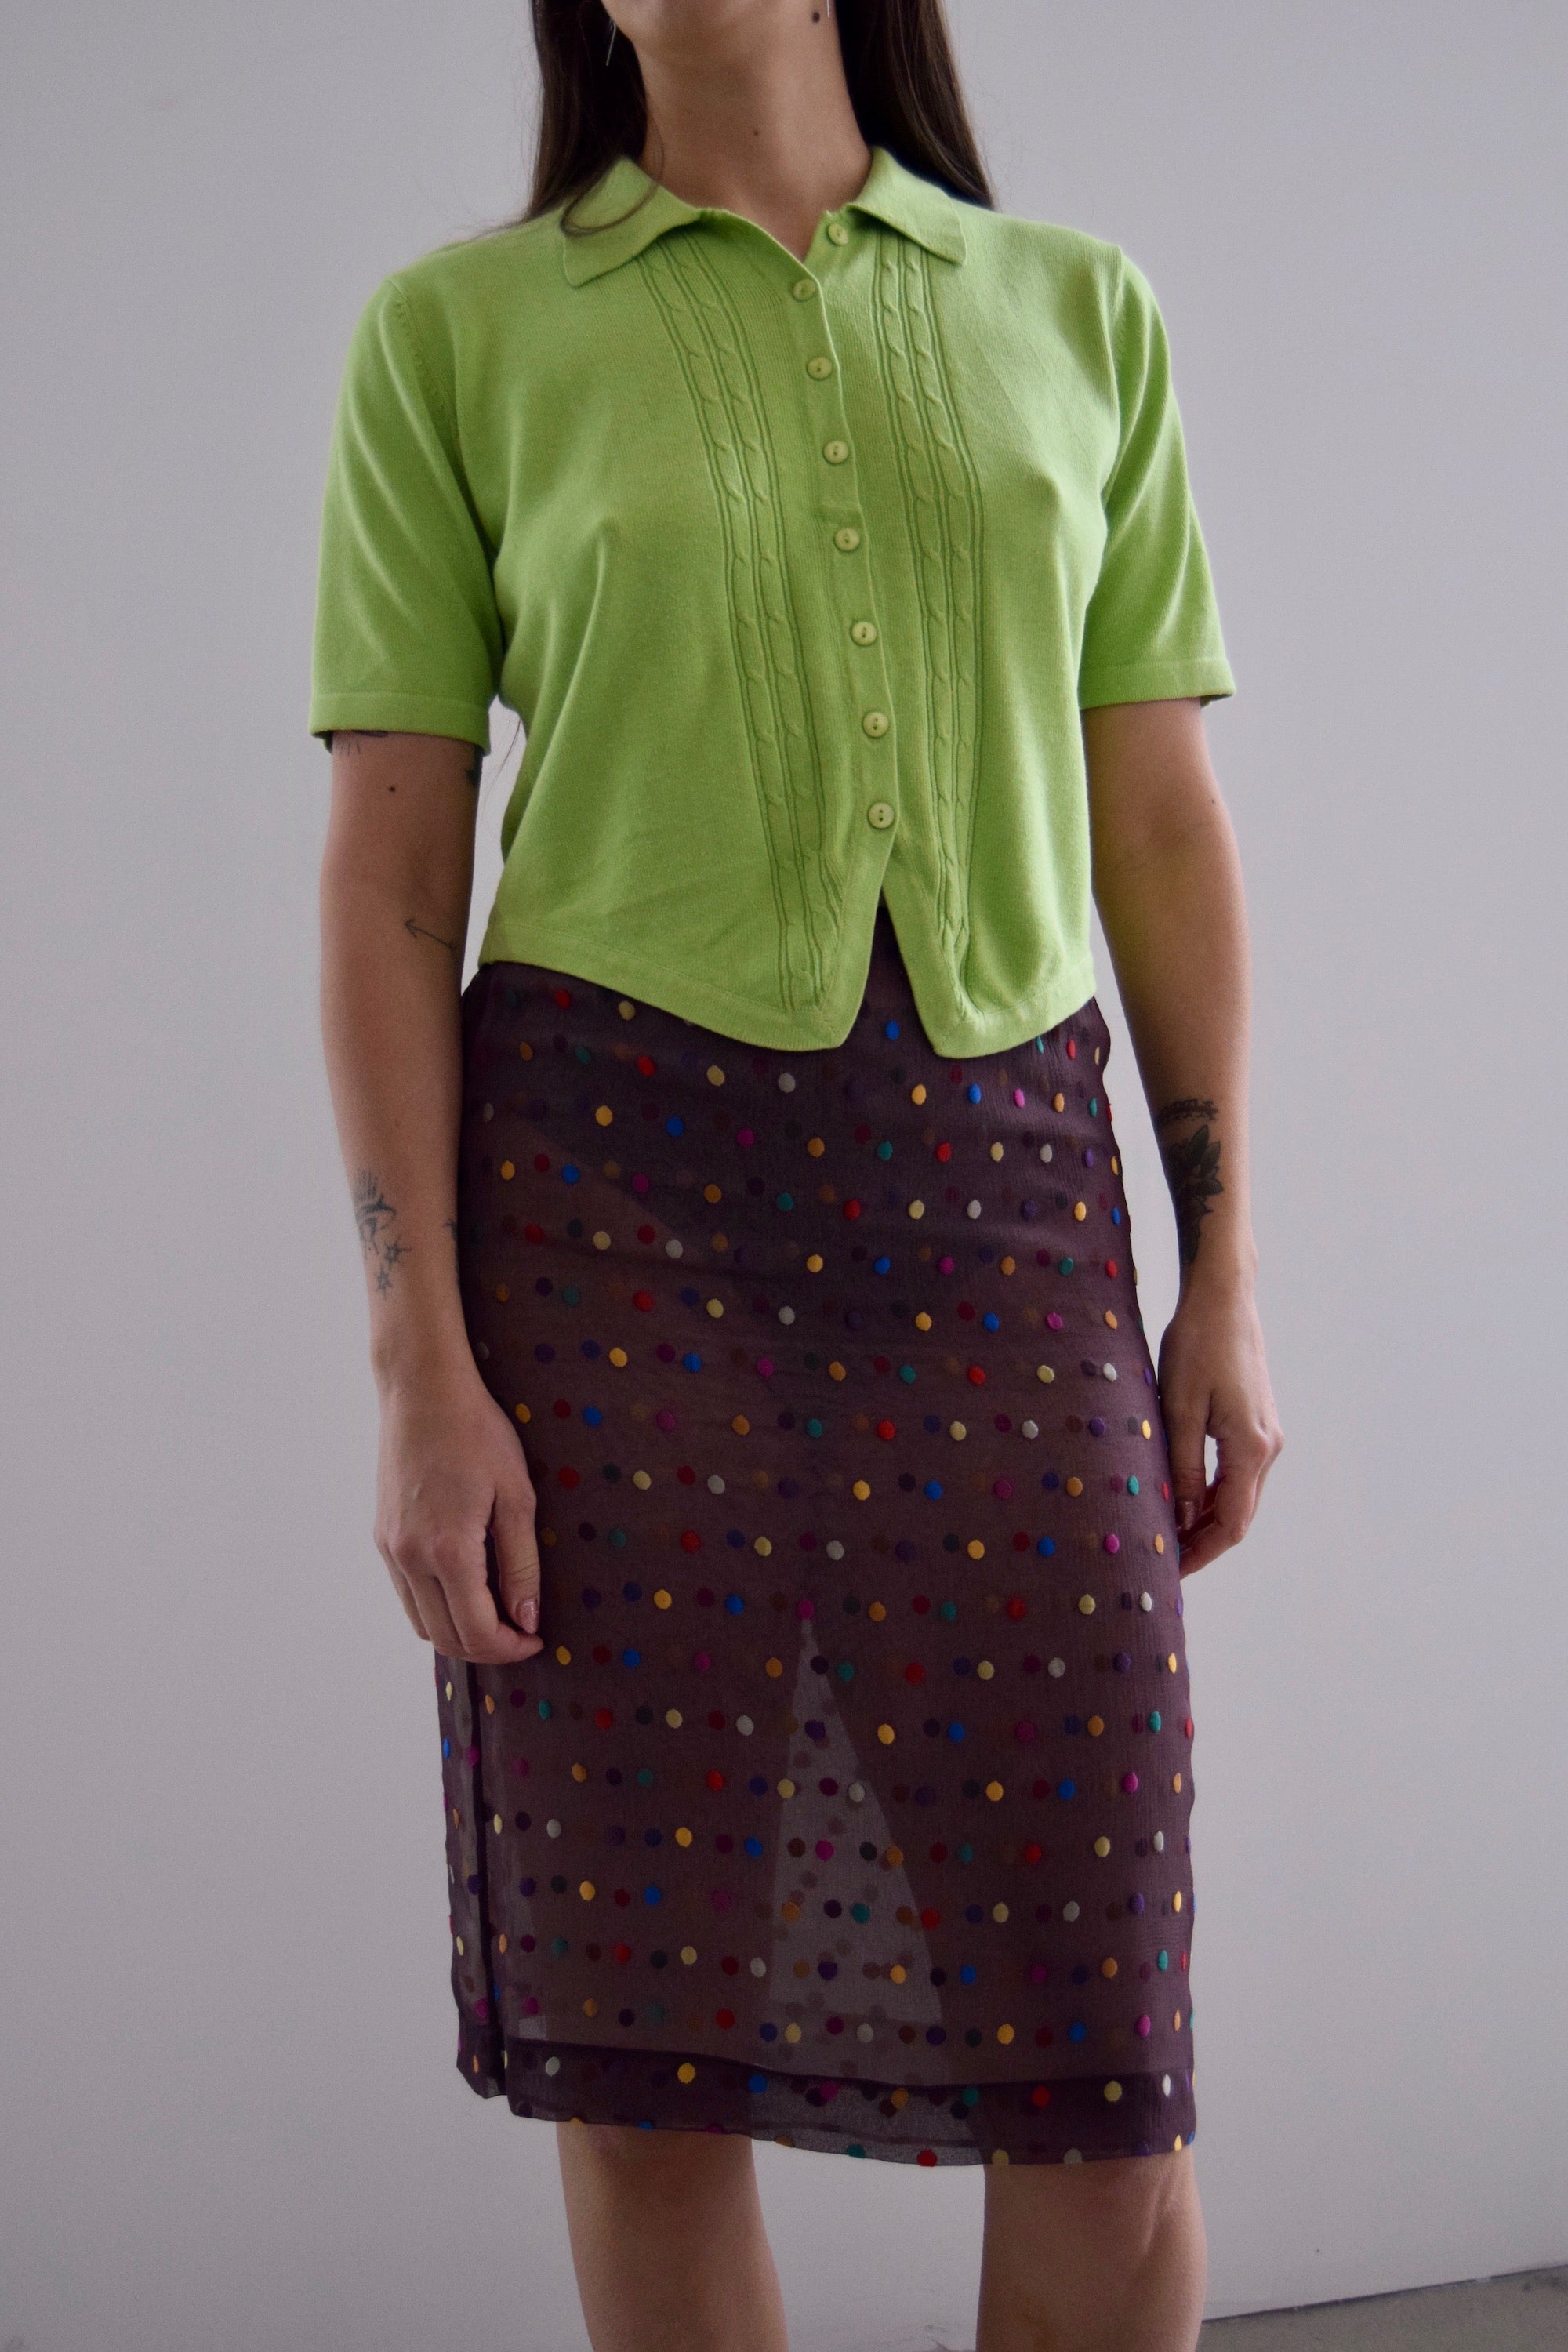 Clements Ribeiro Rainbow Dot Silk Chiffon Skirt